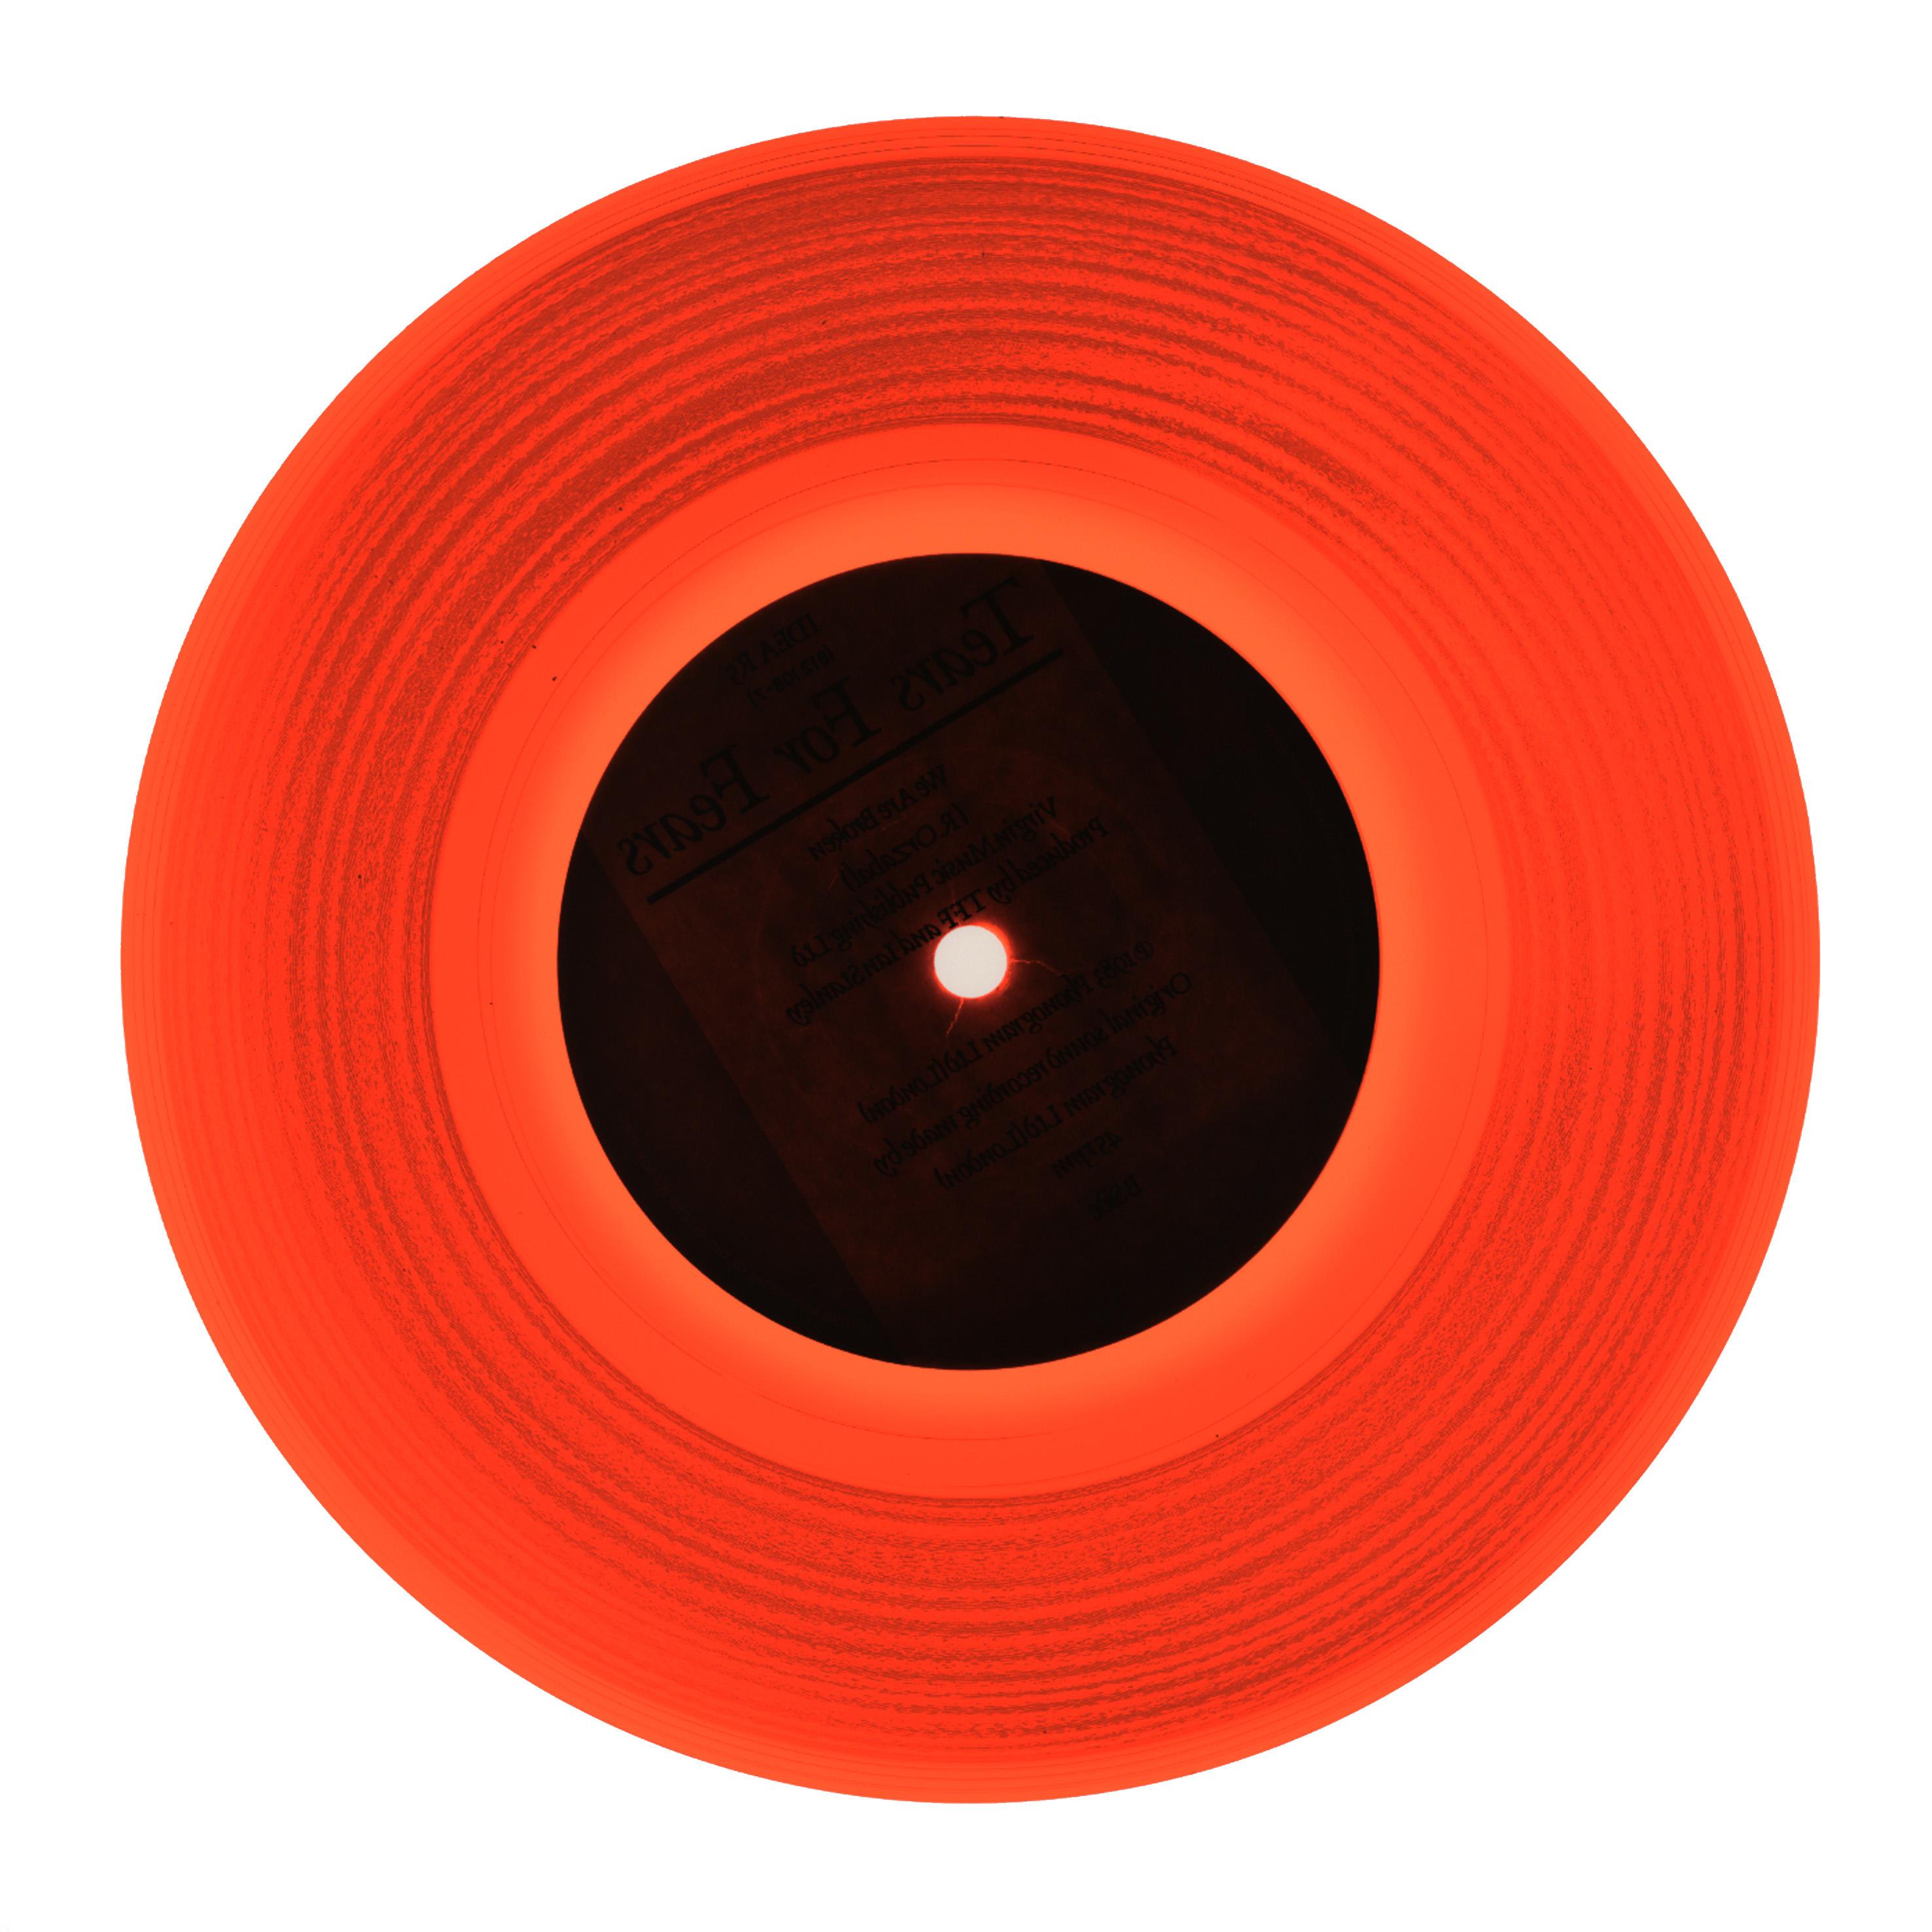 Heidler & Heeps Print - B Side Vinyl Collection, Idea (Orange) - Contemporary Pop Art Color Photogrpahy